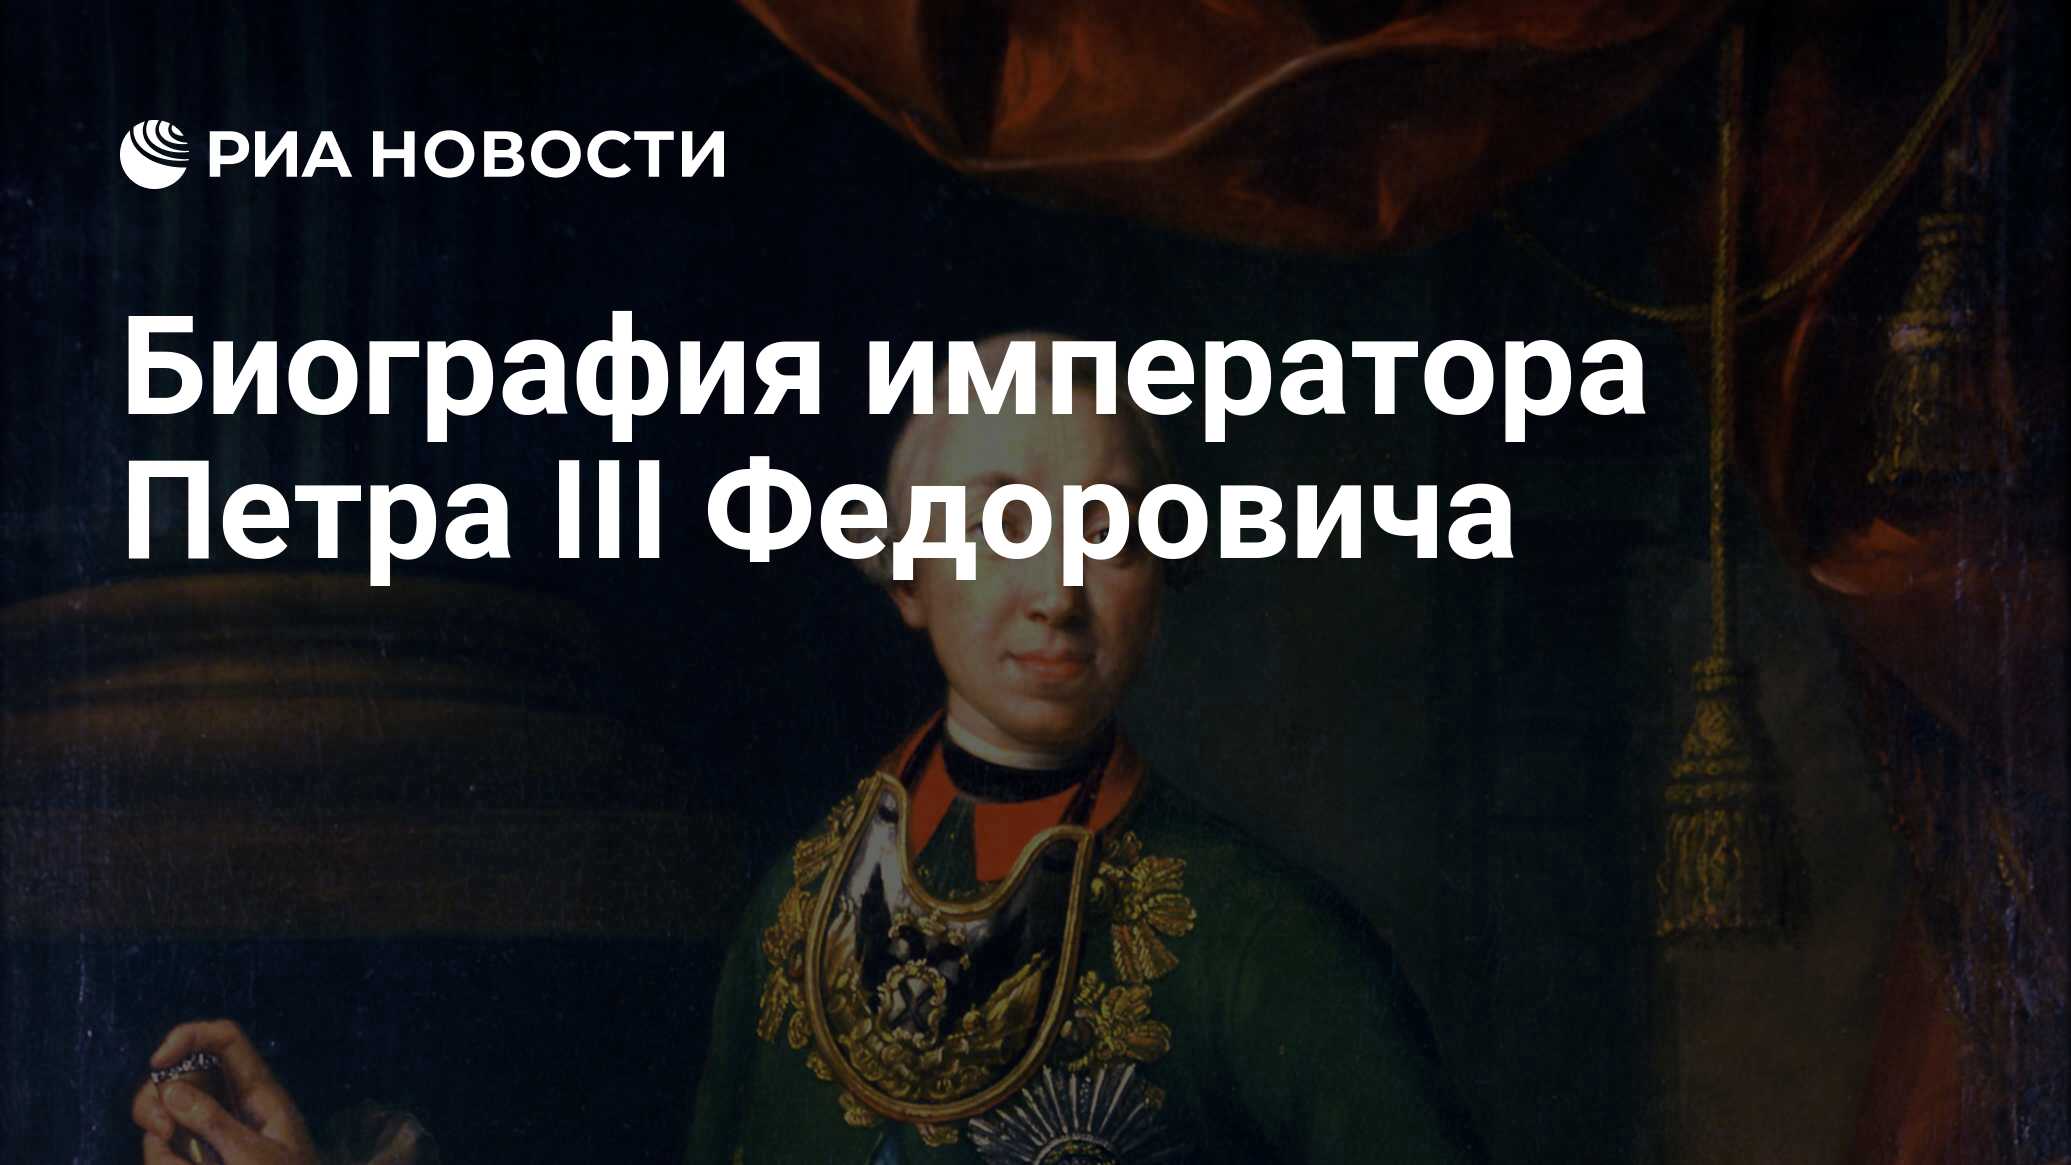 Биография императора Петра III Федоровича - РИА Новости, 01.03.2020